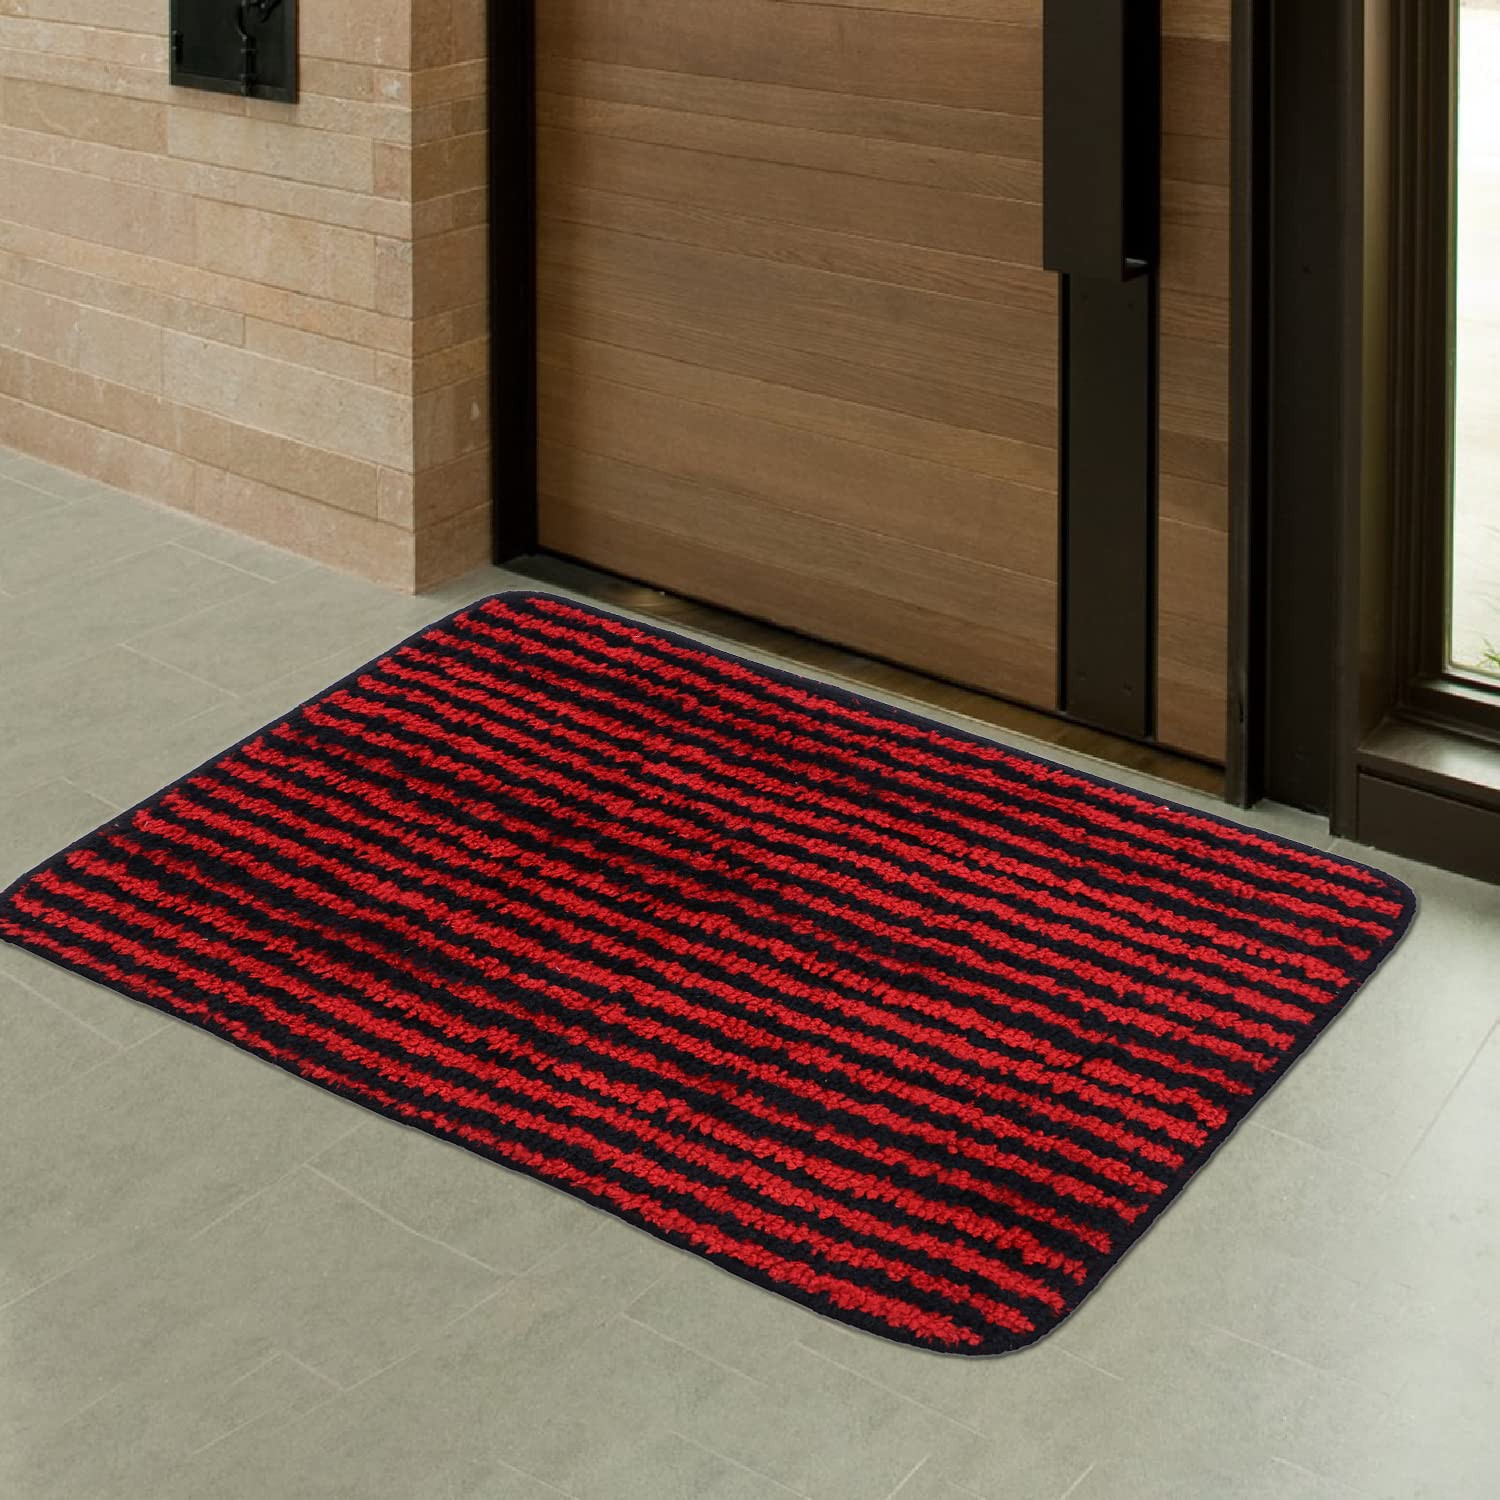 Kuber Industries Door mat|Microfiber Slip-Resistant Water Absorbant Floor Mat|Stripes Pattern Entrance Mat for Kitchen,Bedside,Door,Living Room,60x40 cm,Pack of 2 (Black & Red)